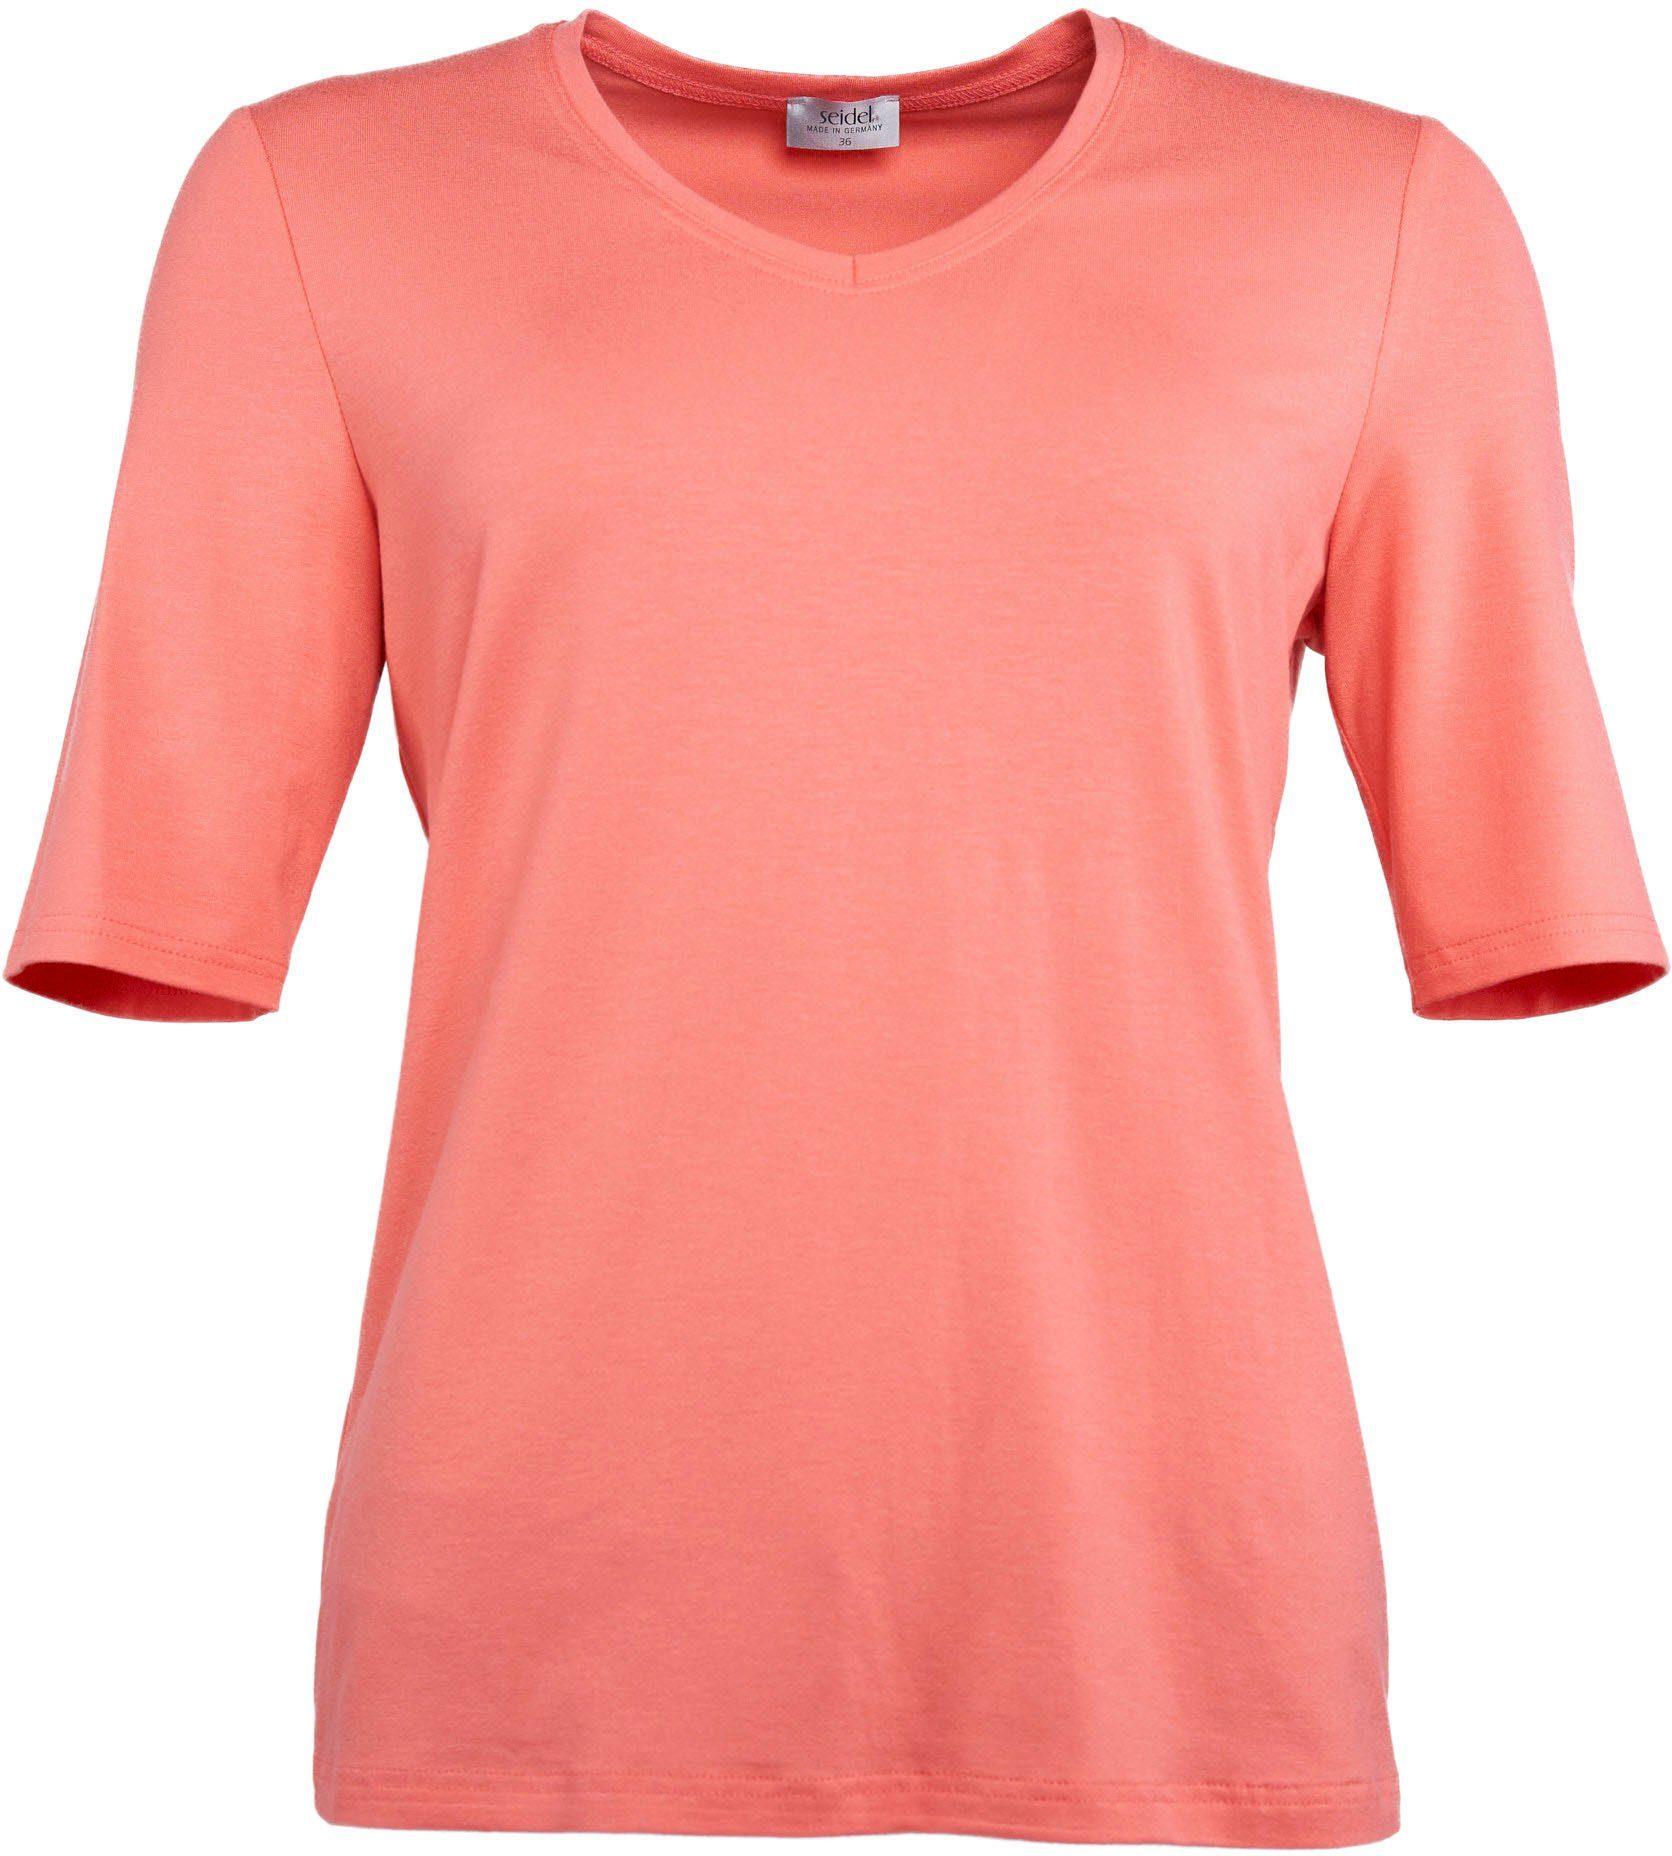 Seidel Moden V-Shirt apricot GERMANY Material, mit MADE aus Halbarm IN softem